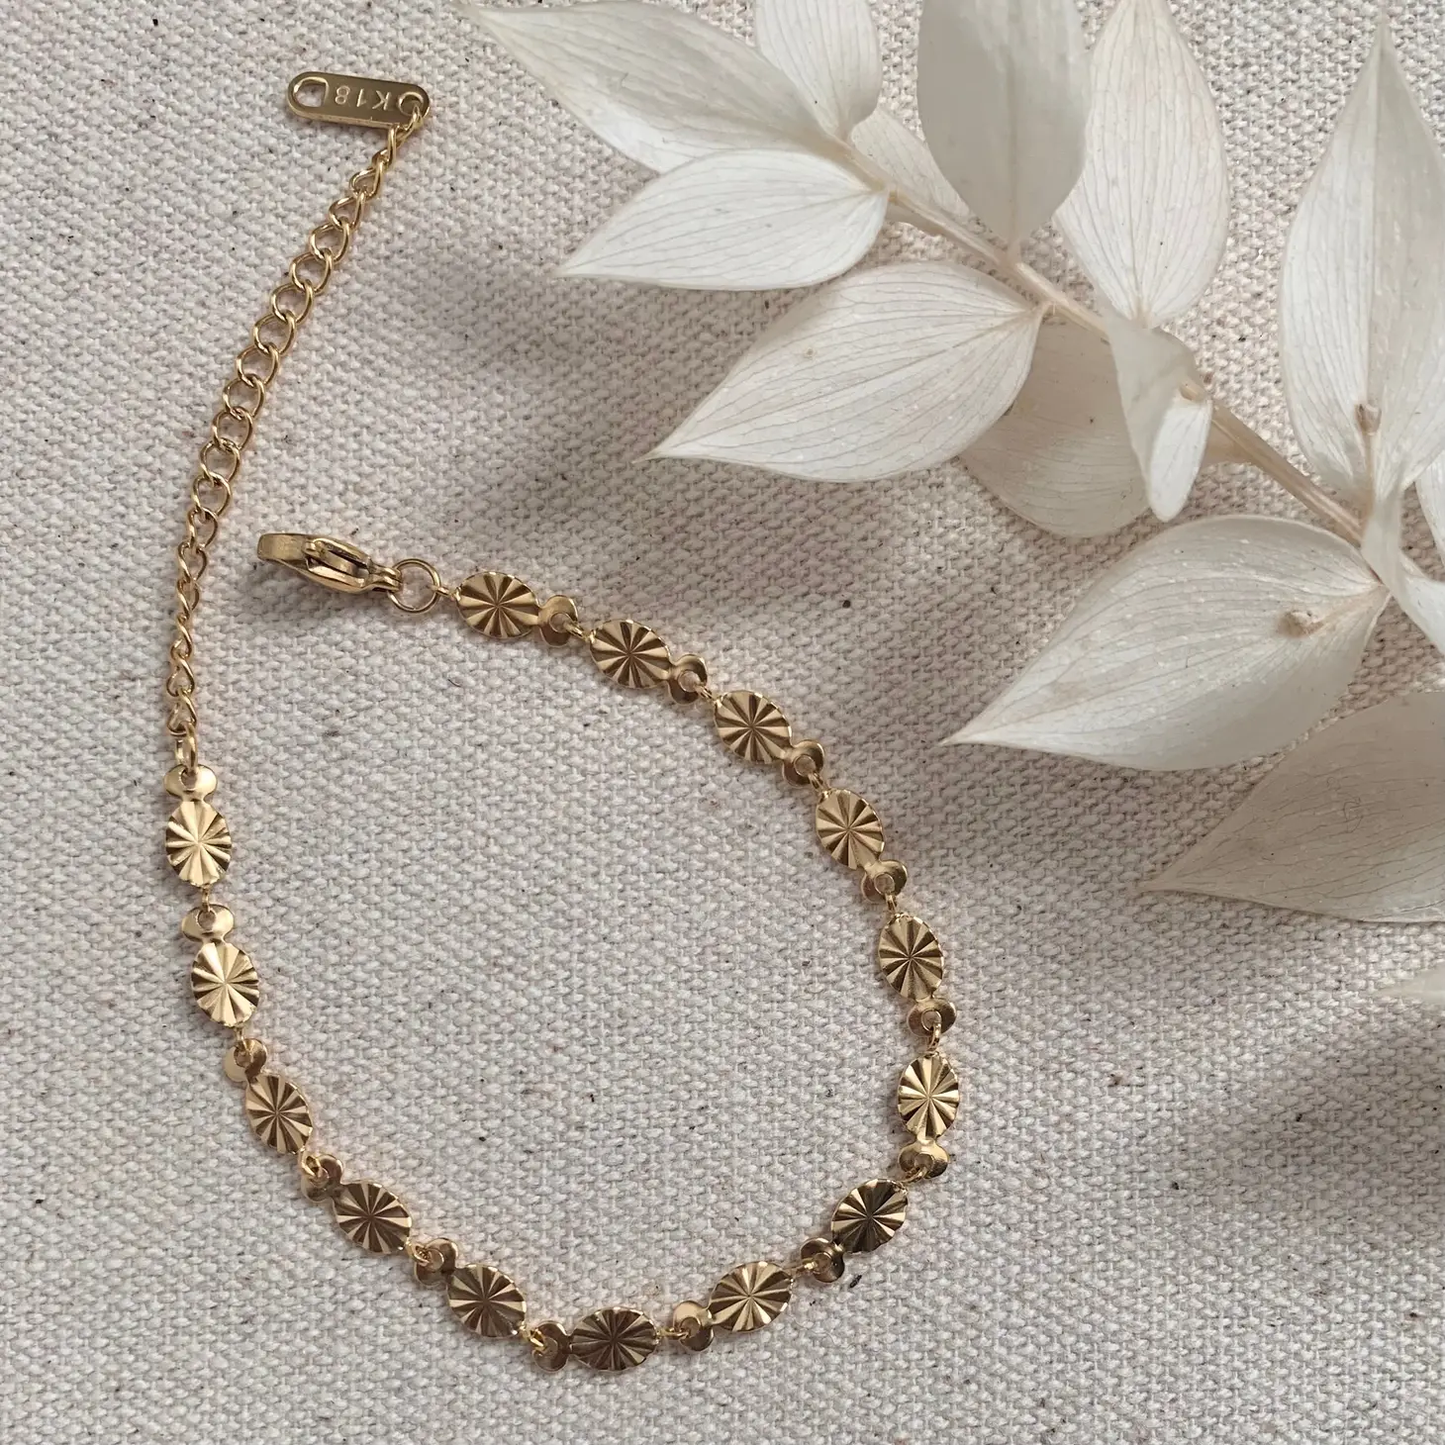 18k Gold Plated Oval Sunburst Chain Bracelet